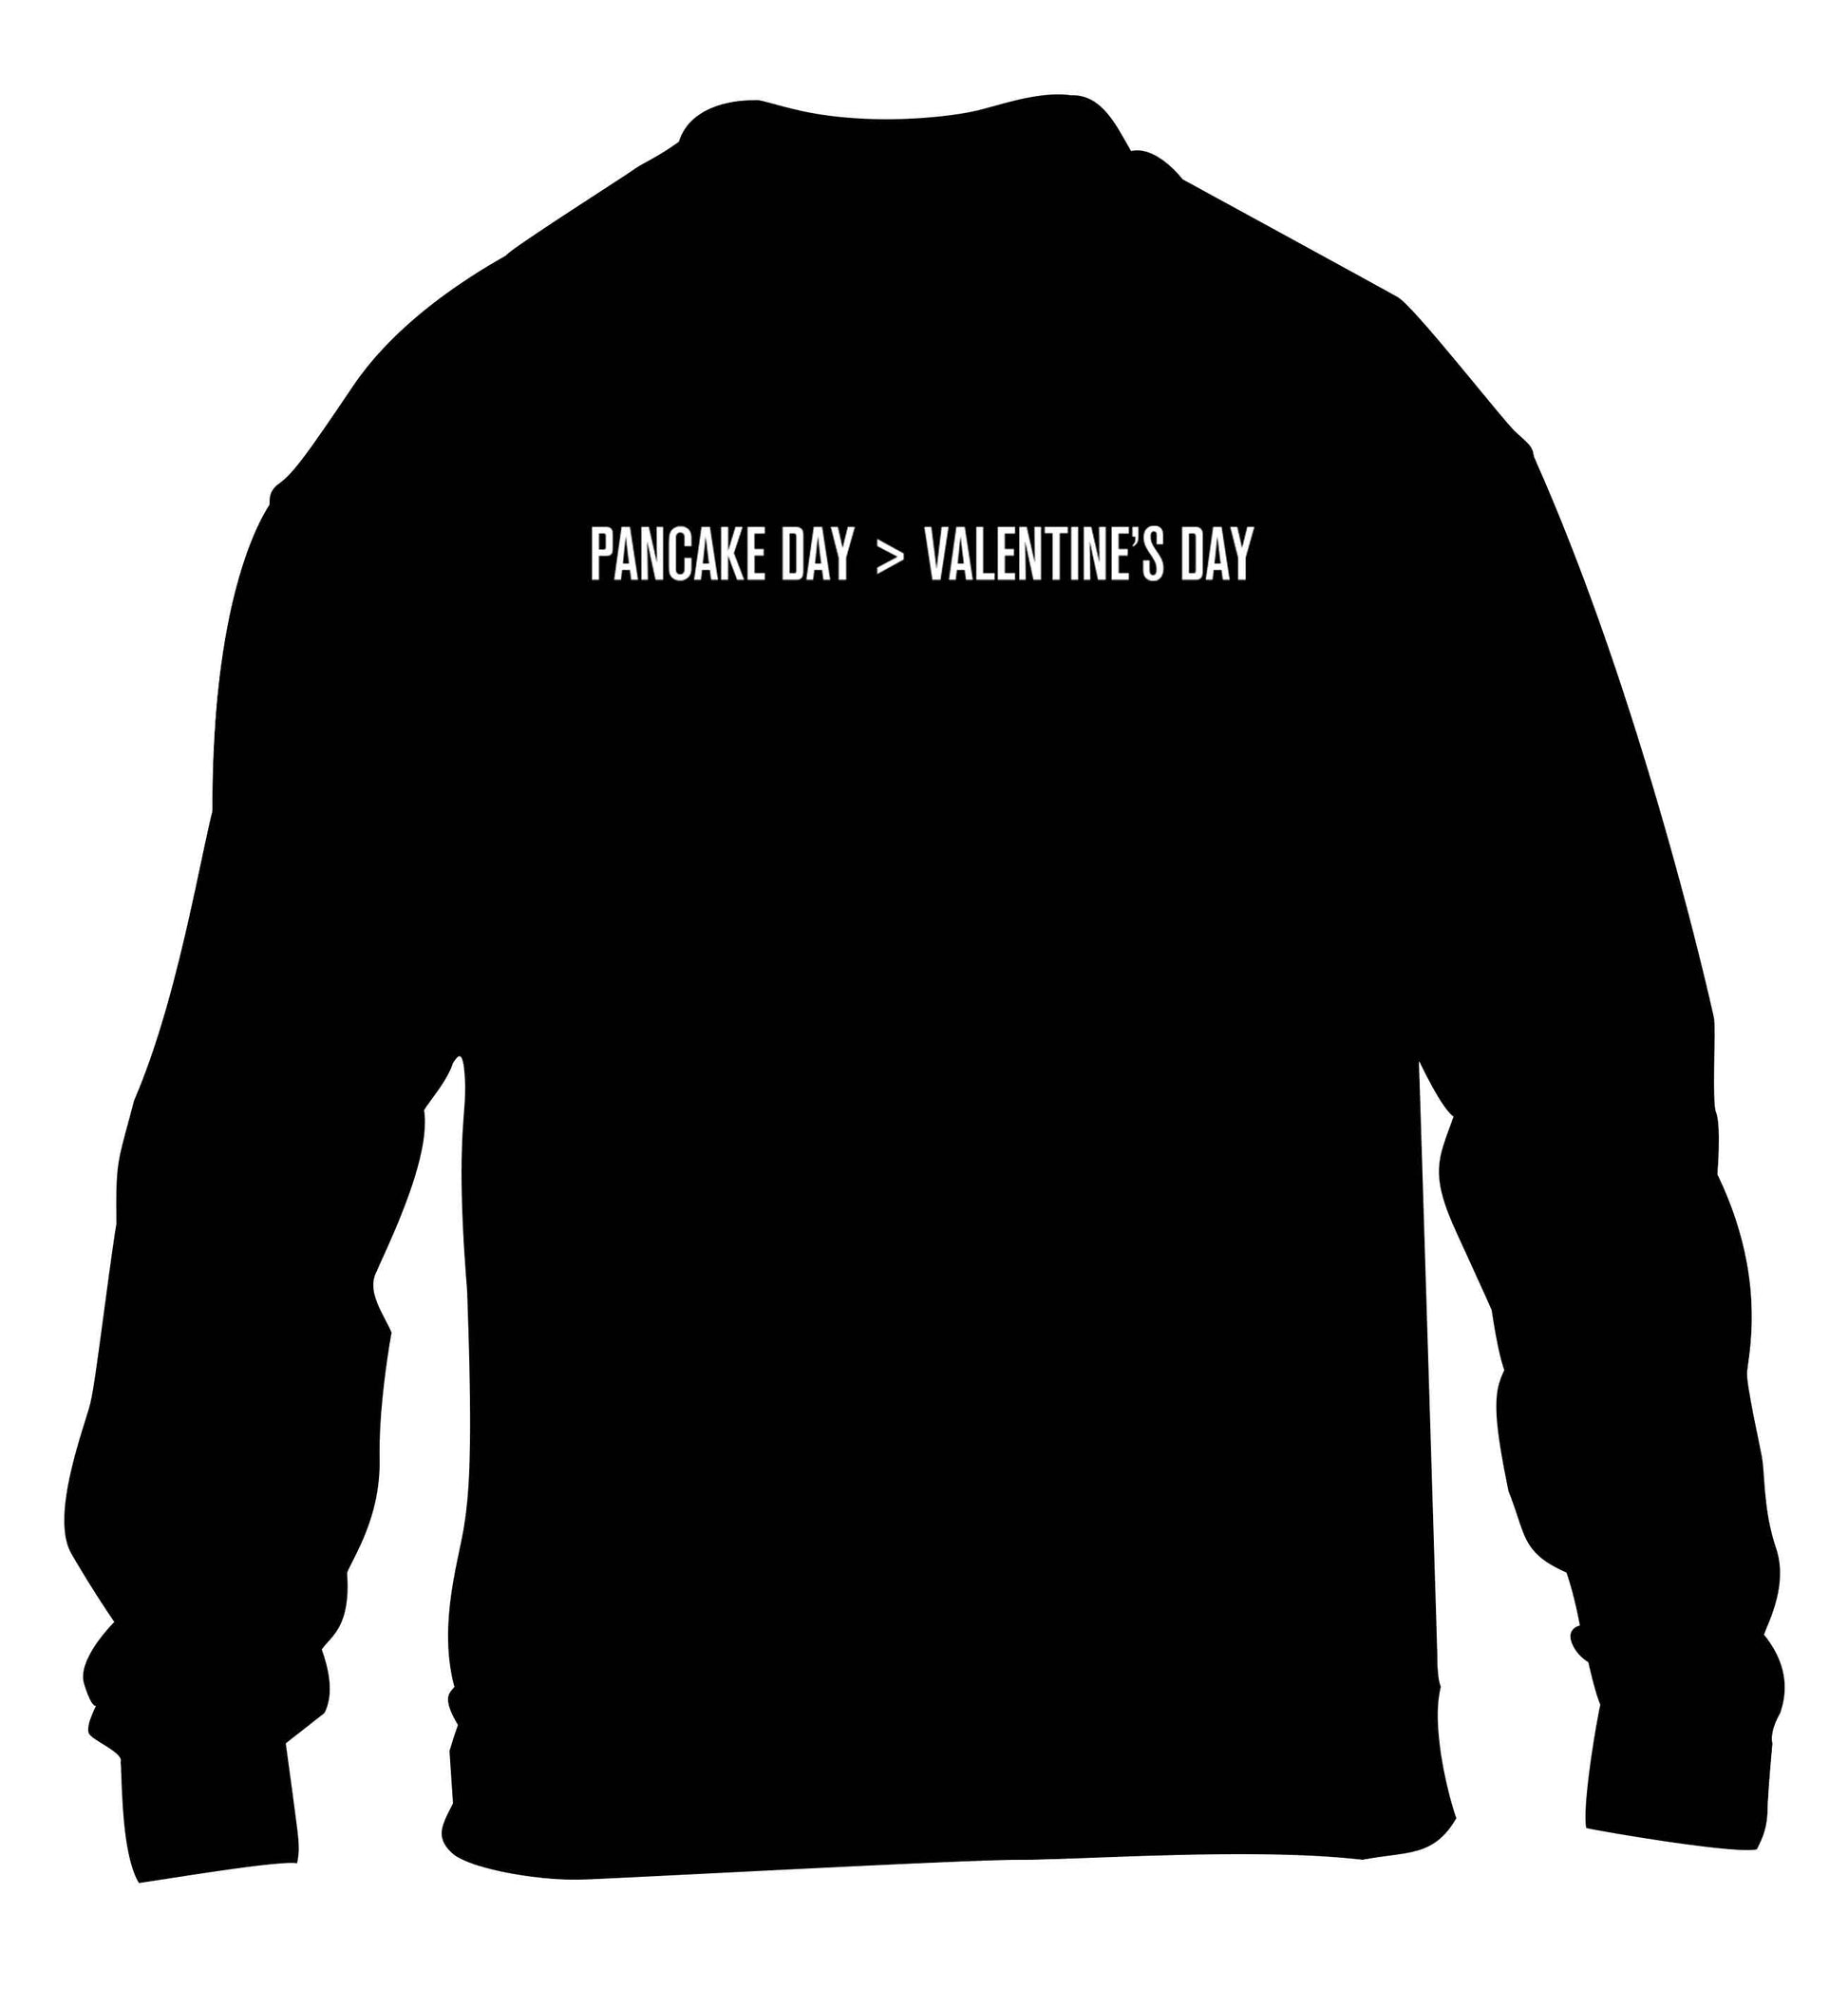 Pancake day > valentines day children's black sweater 12-13 Years